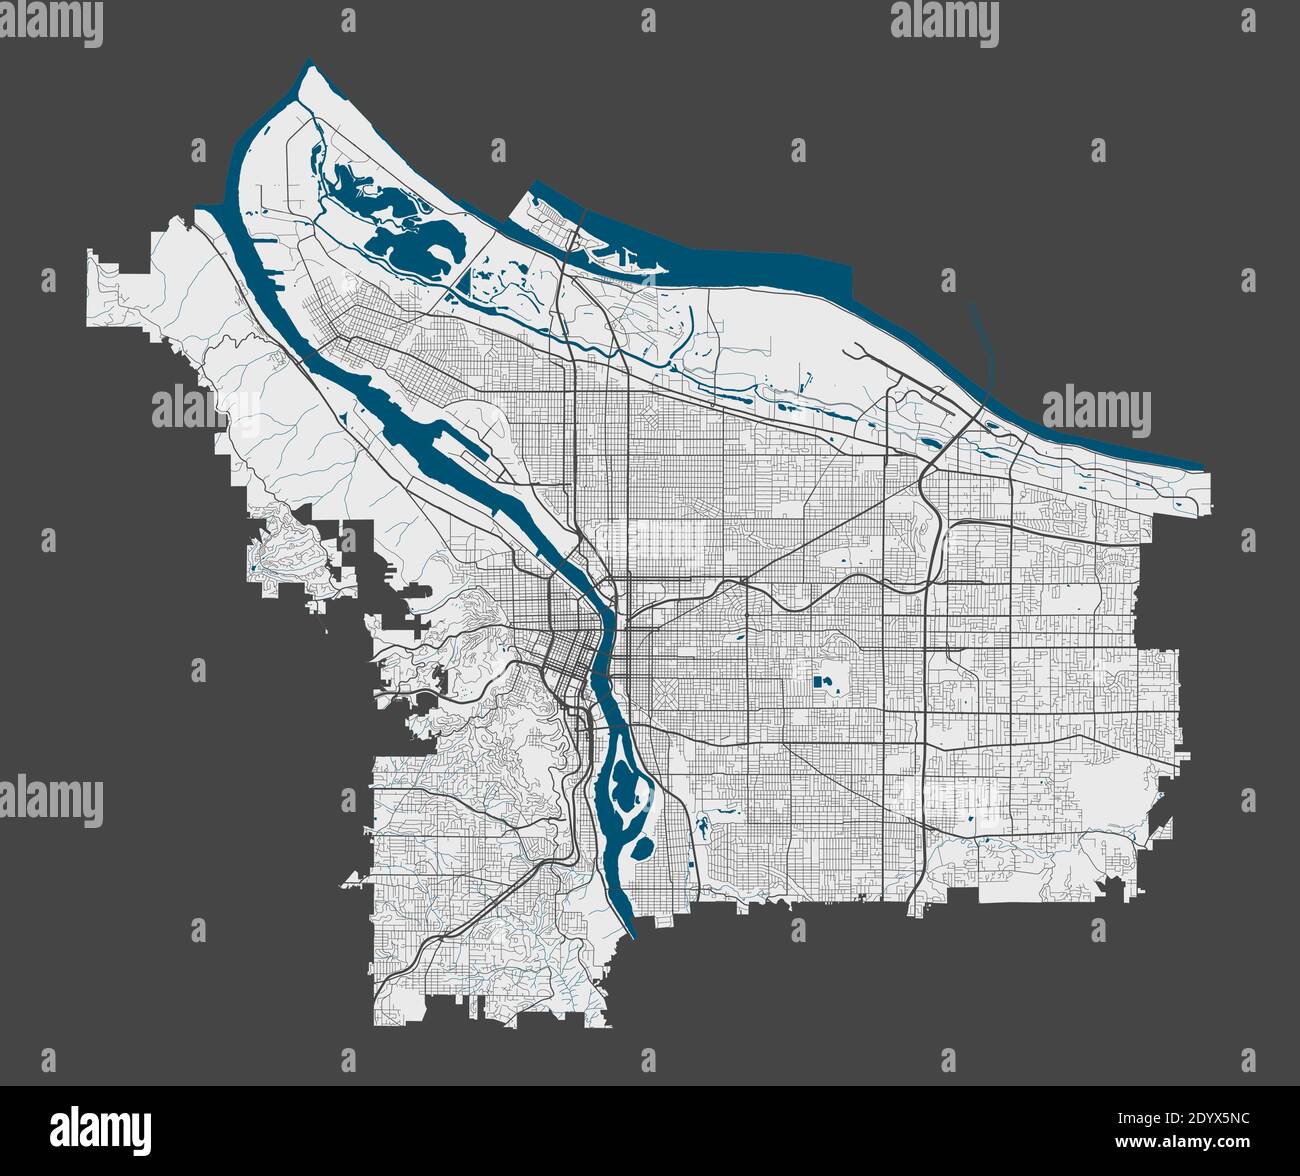 portland-map-detailed-map-of-portland-city-administrative-area